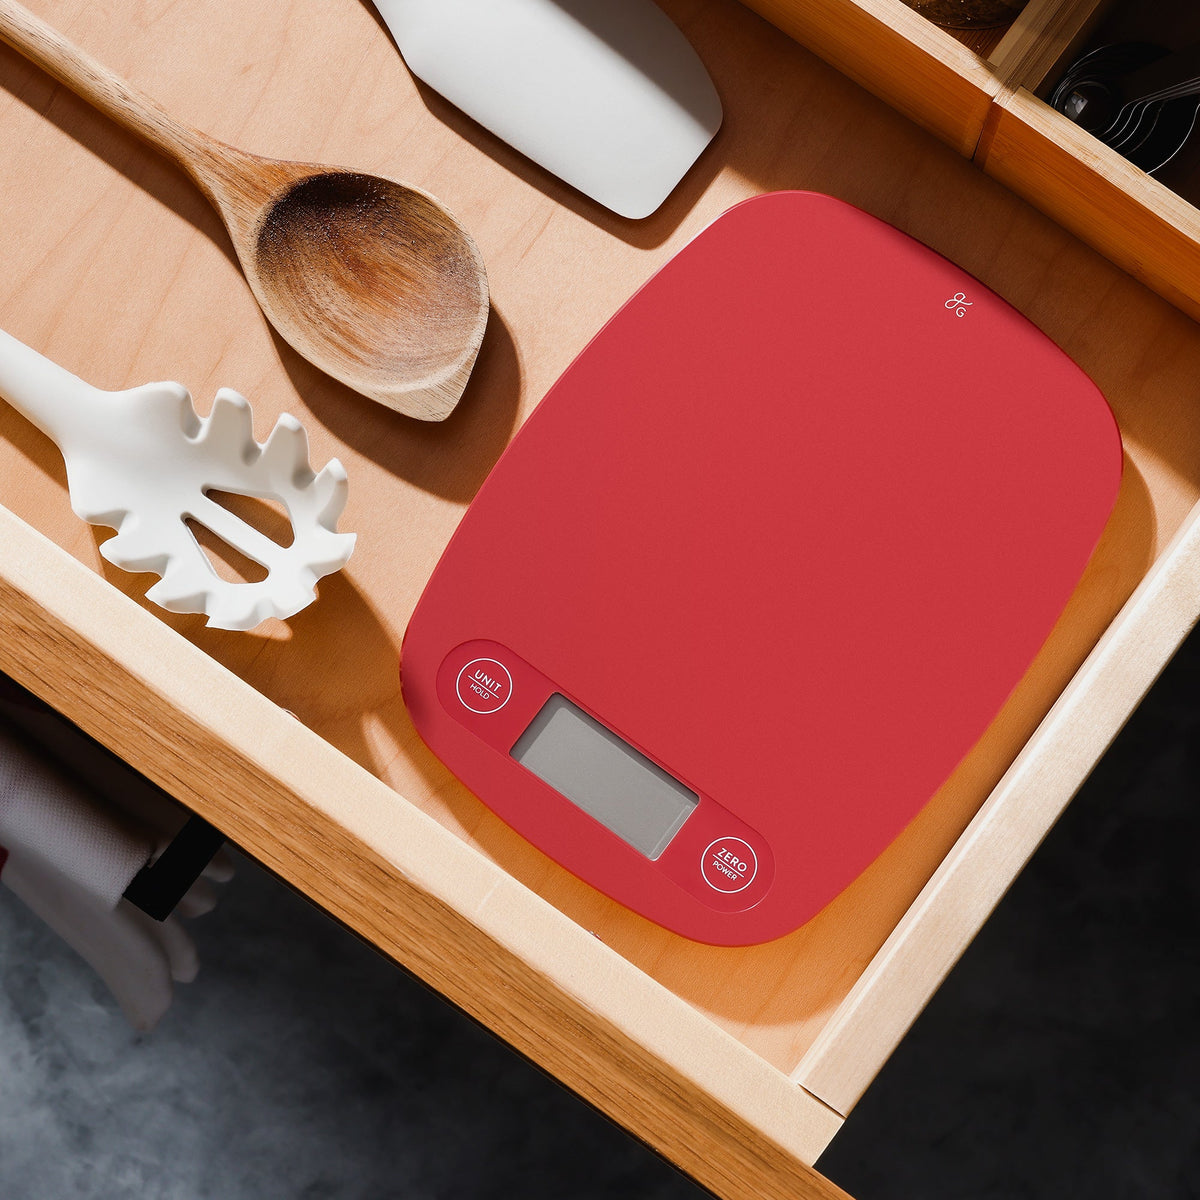 Digital Kitchen Scale (Cherry Red)